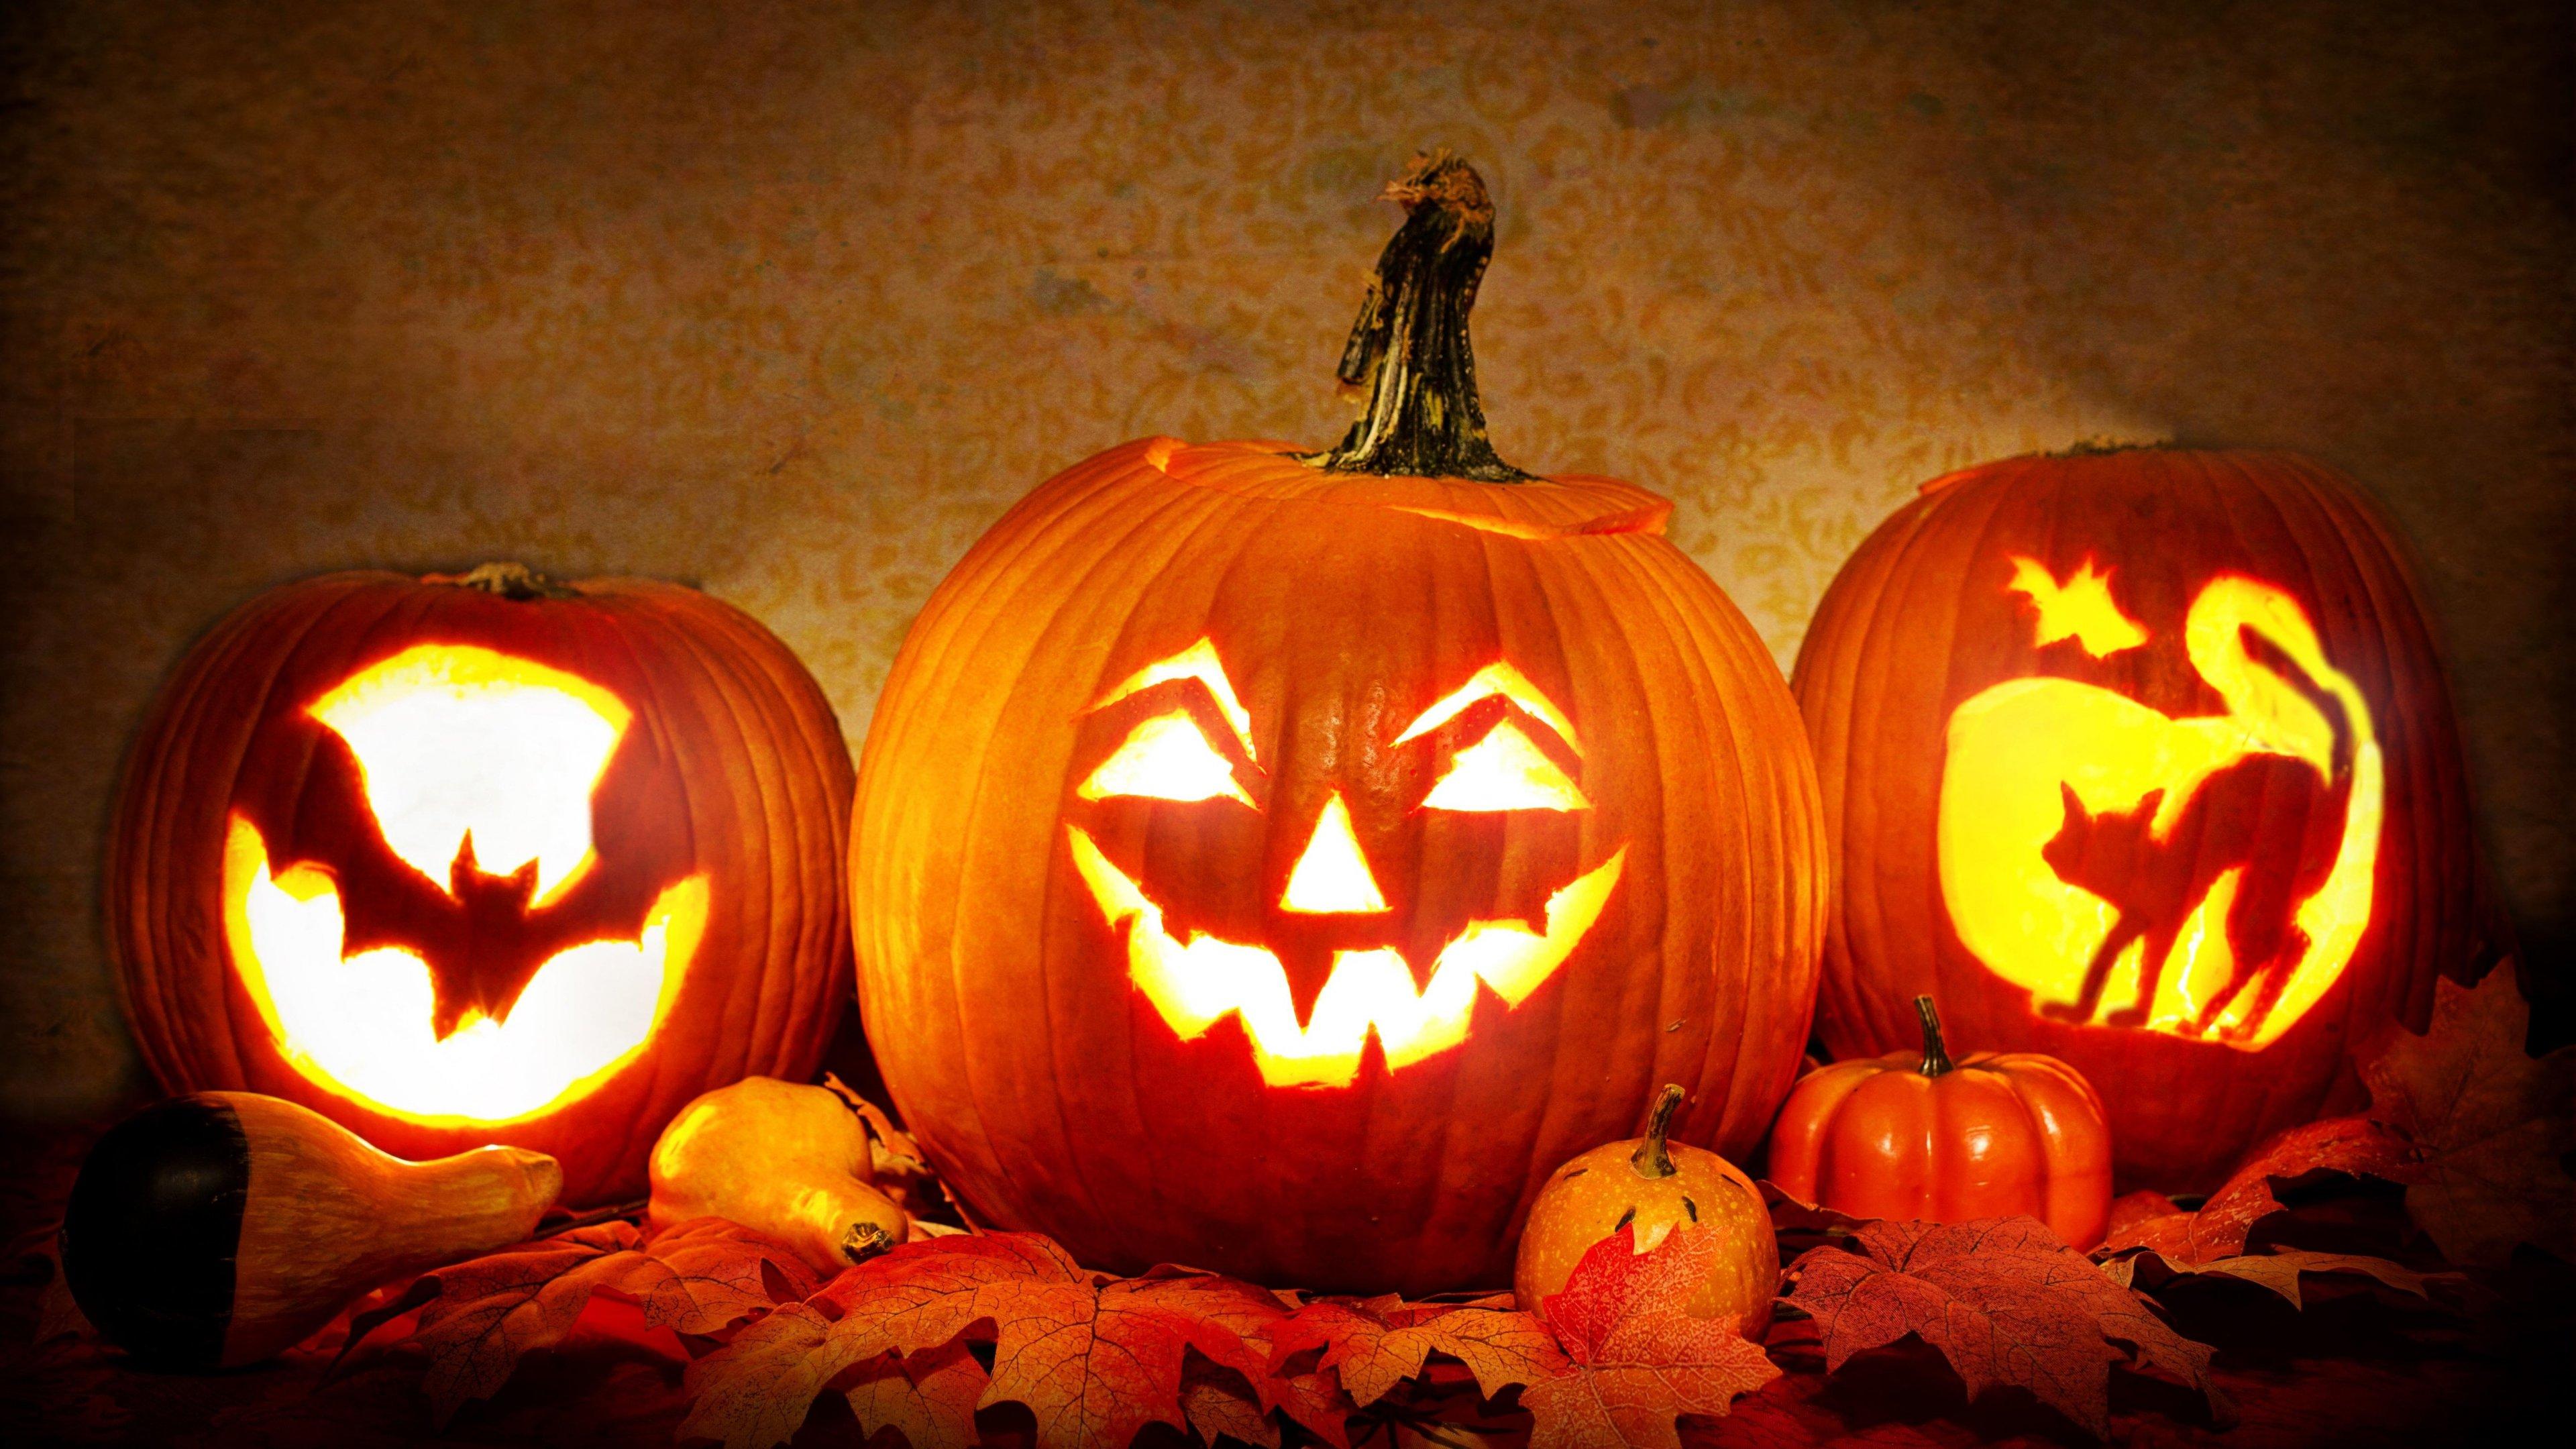 Jack o' Lantern Halloween Pumpkin Wallpaper, Android & Desktop Background